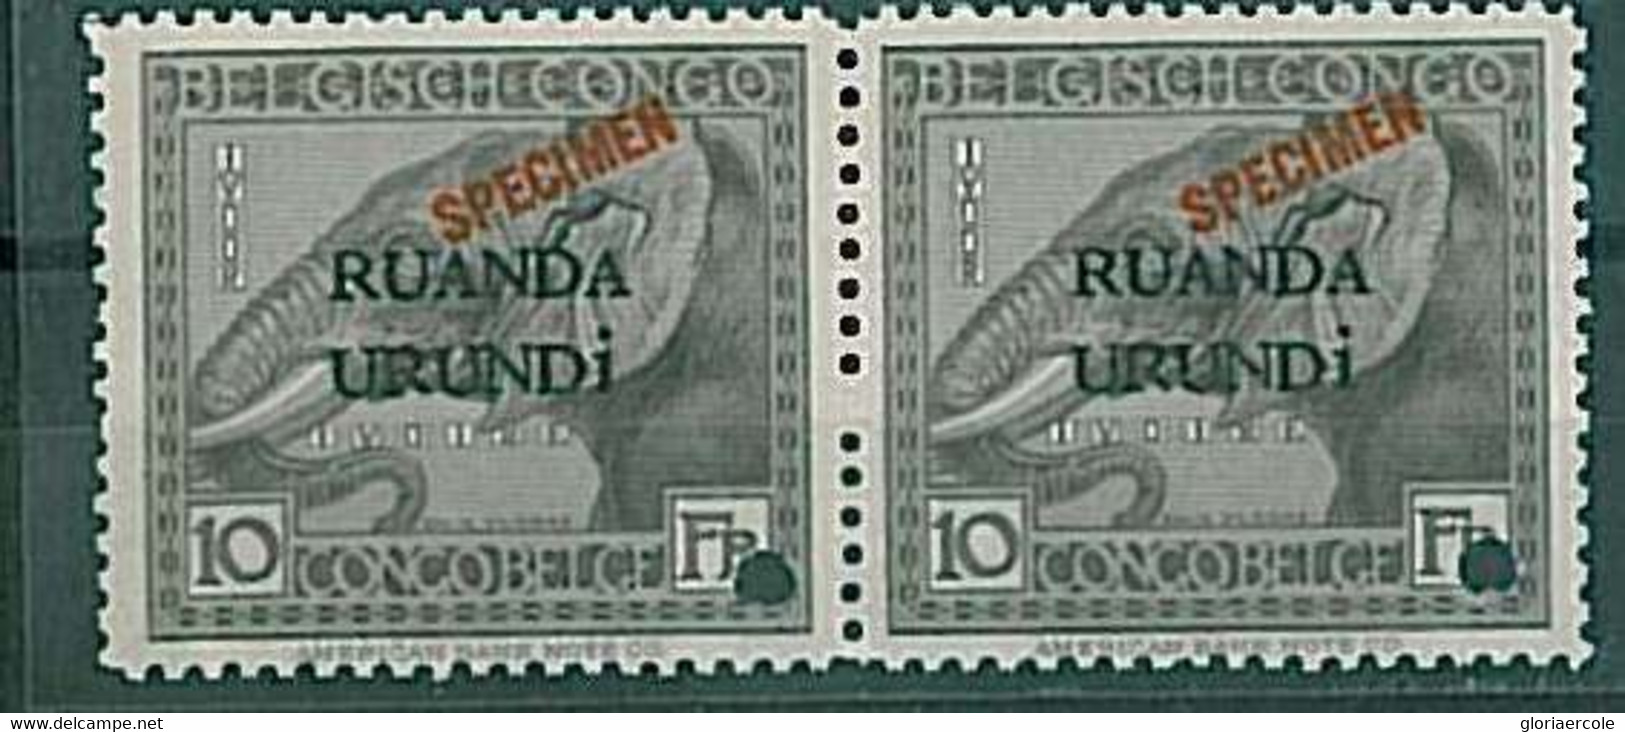 20568 - RUANDA URUNDI - STAMPS : Pair Of SPECIMEN Stamps - ANIMALS: ELEPHANT - Neufs